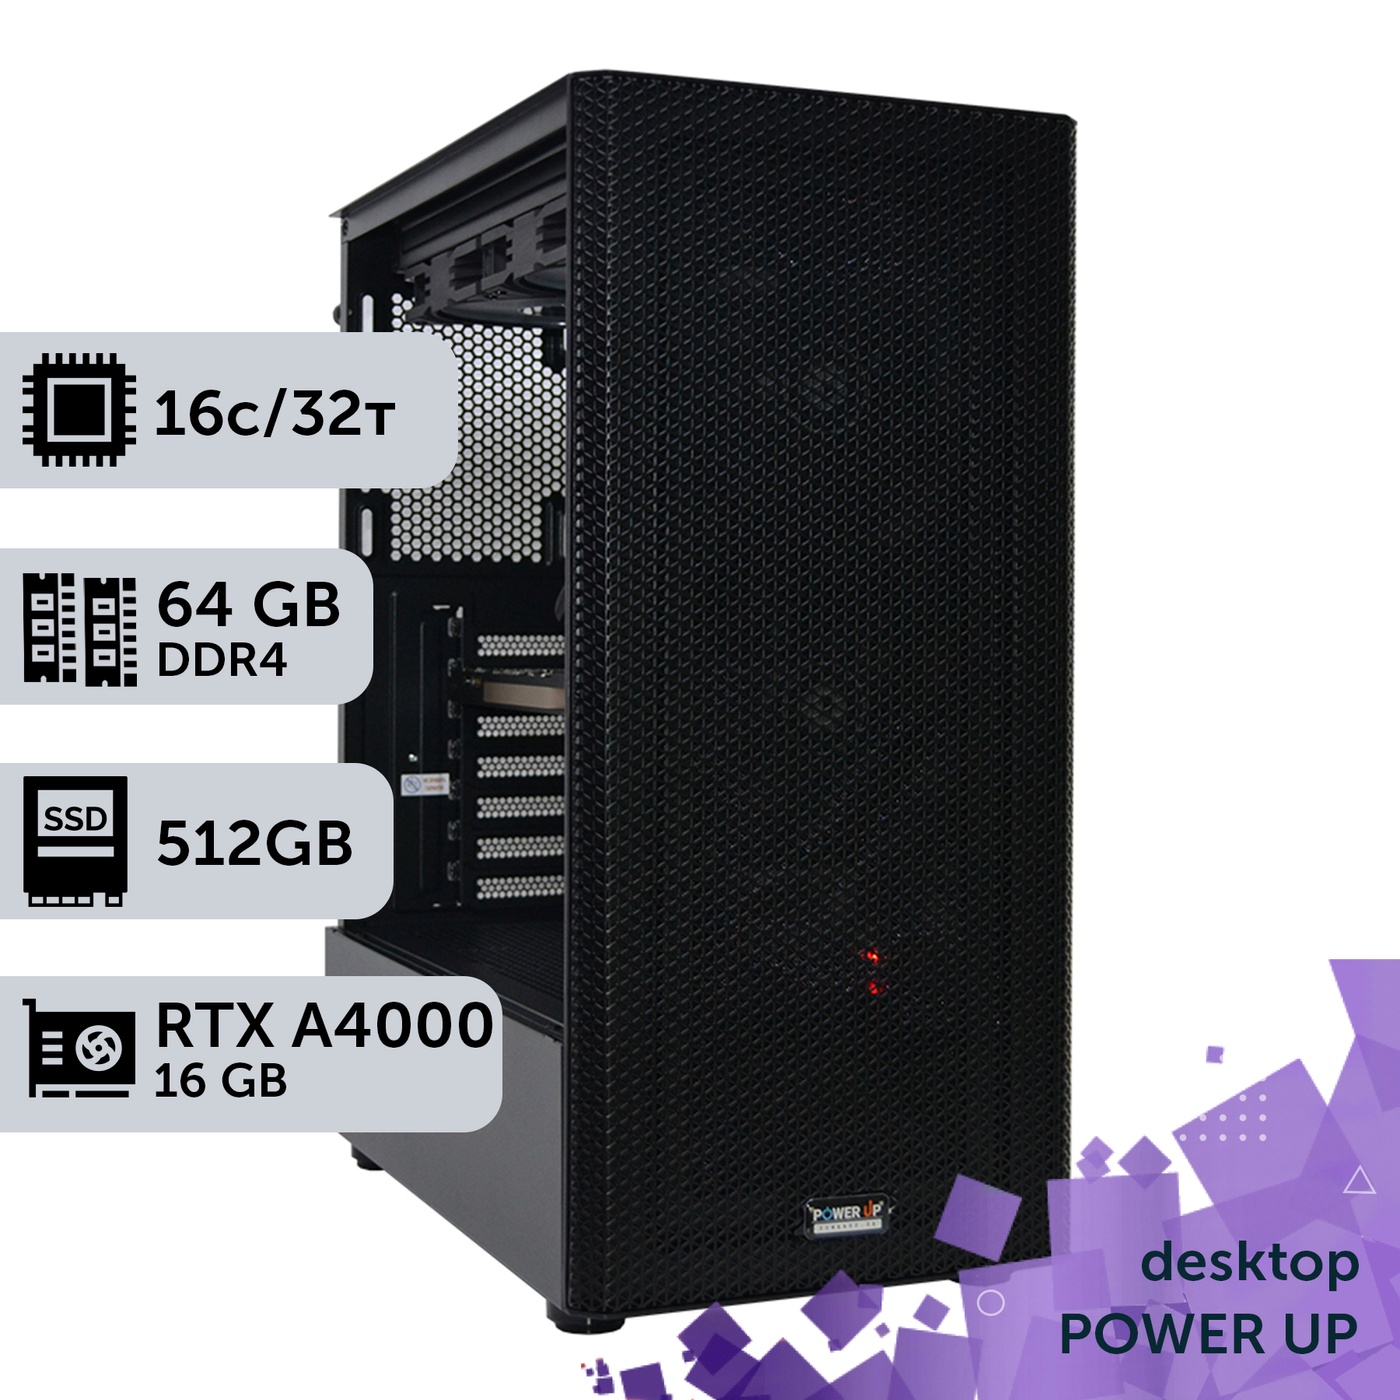 Рабочая станция PowerUp Desktop #104 Ryzen 9 5950x/64 GB/HDD 1 TB/SSD 512GB/NVIDIA Quadro RTX A4000 16GB